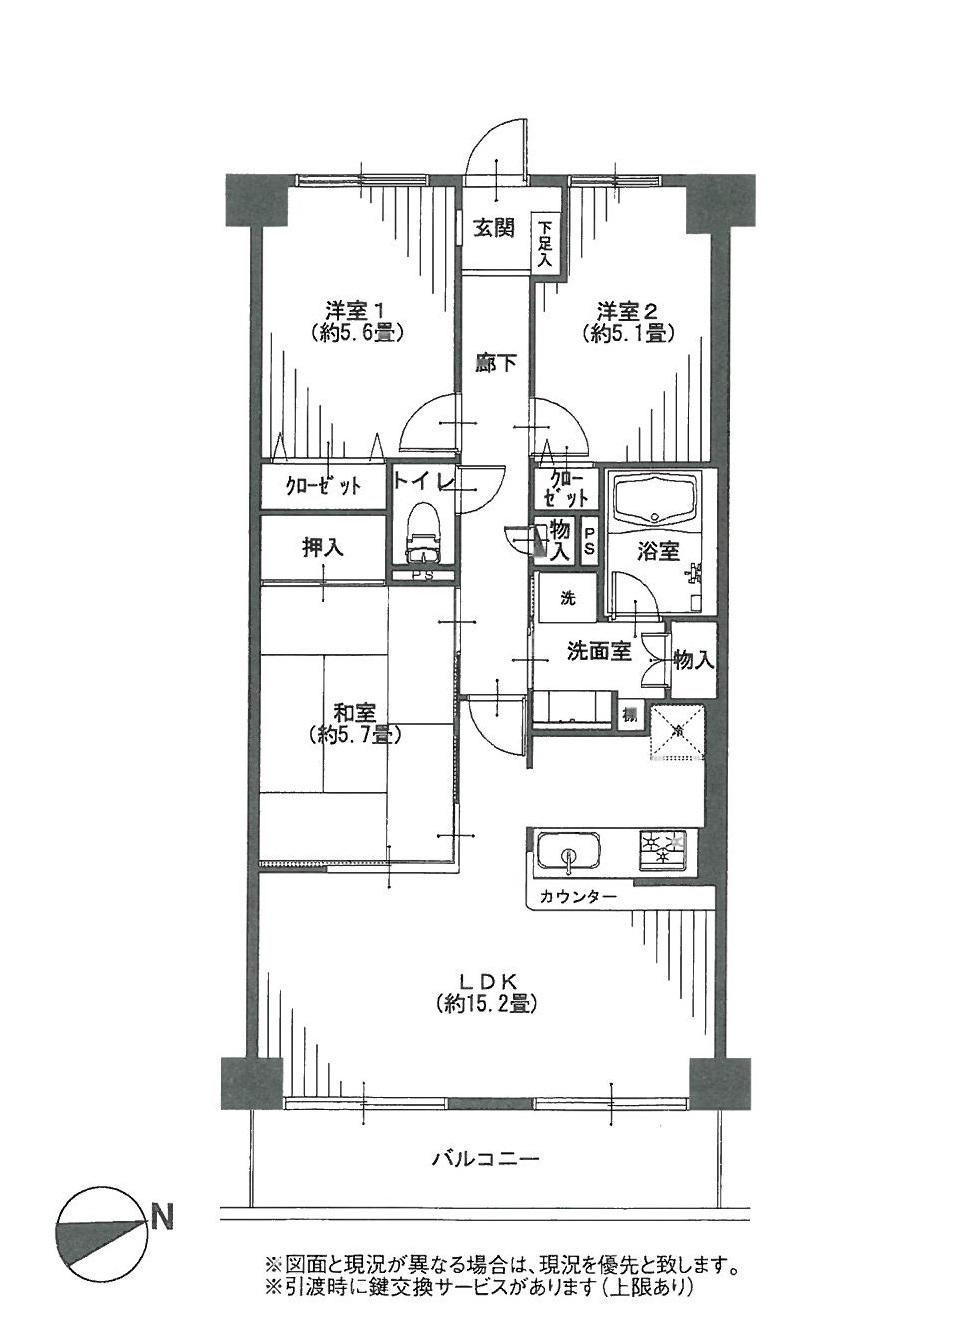 Floor plan. 3LDK, Price 37,900,000 yen, Footprint 70.2 sq m , Balcony area 8.4 sq m